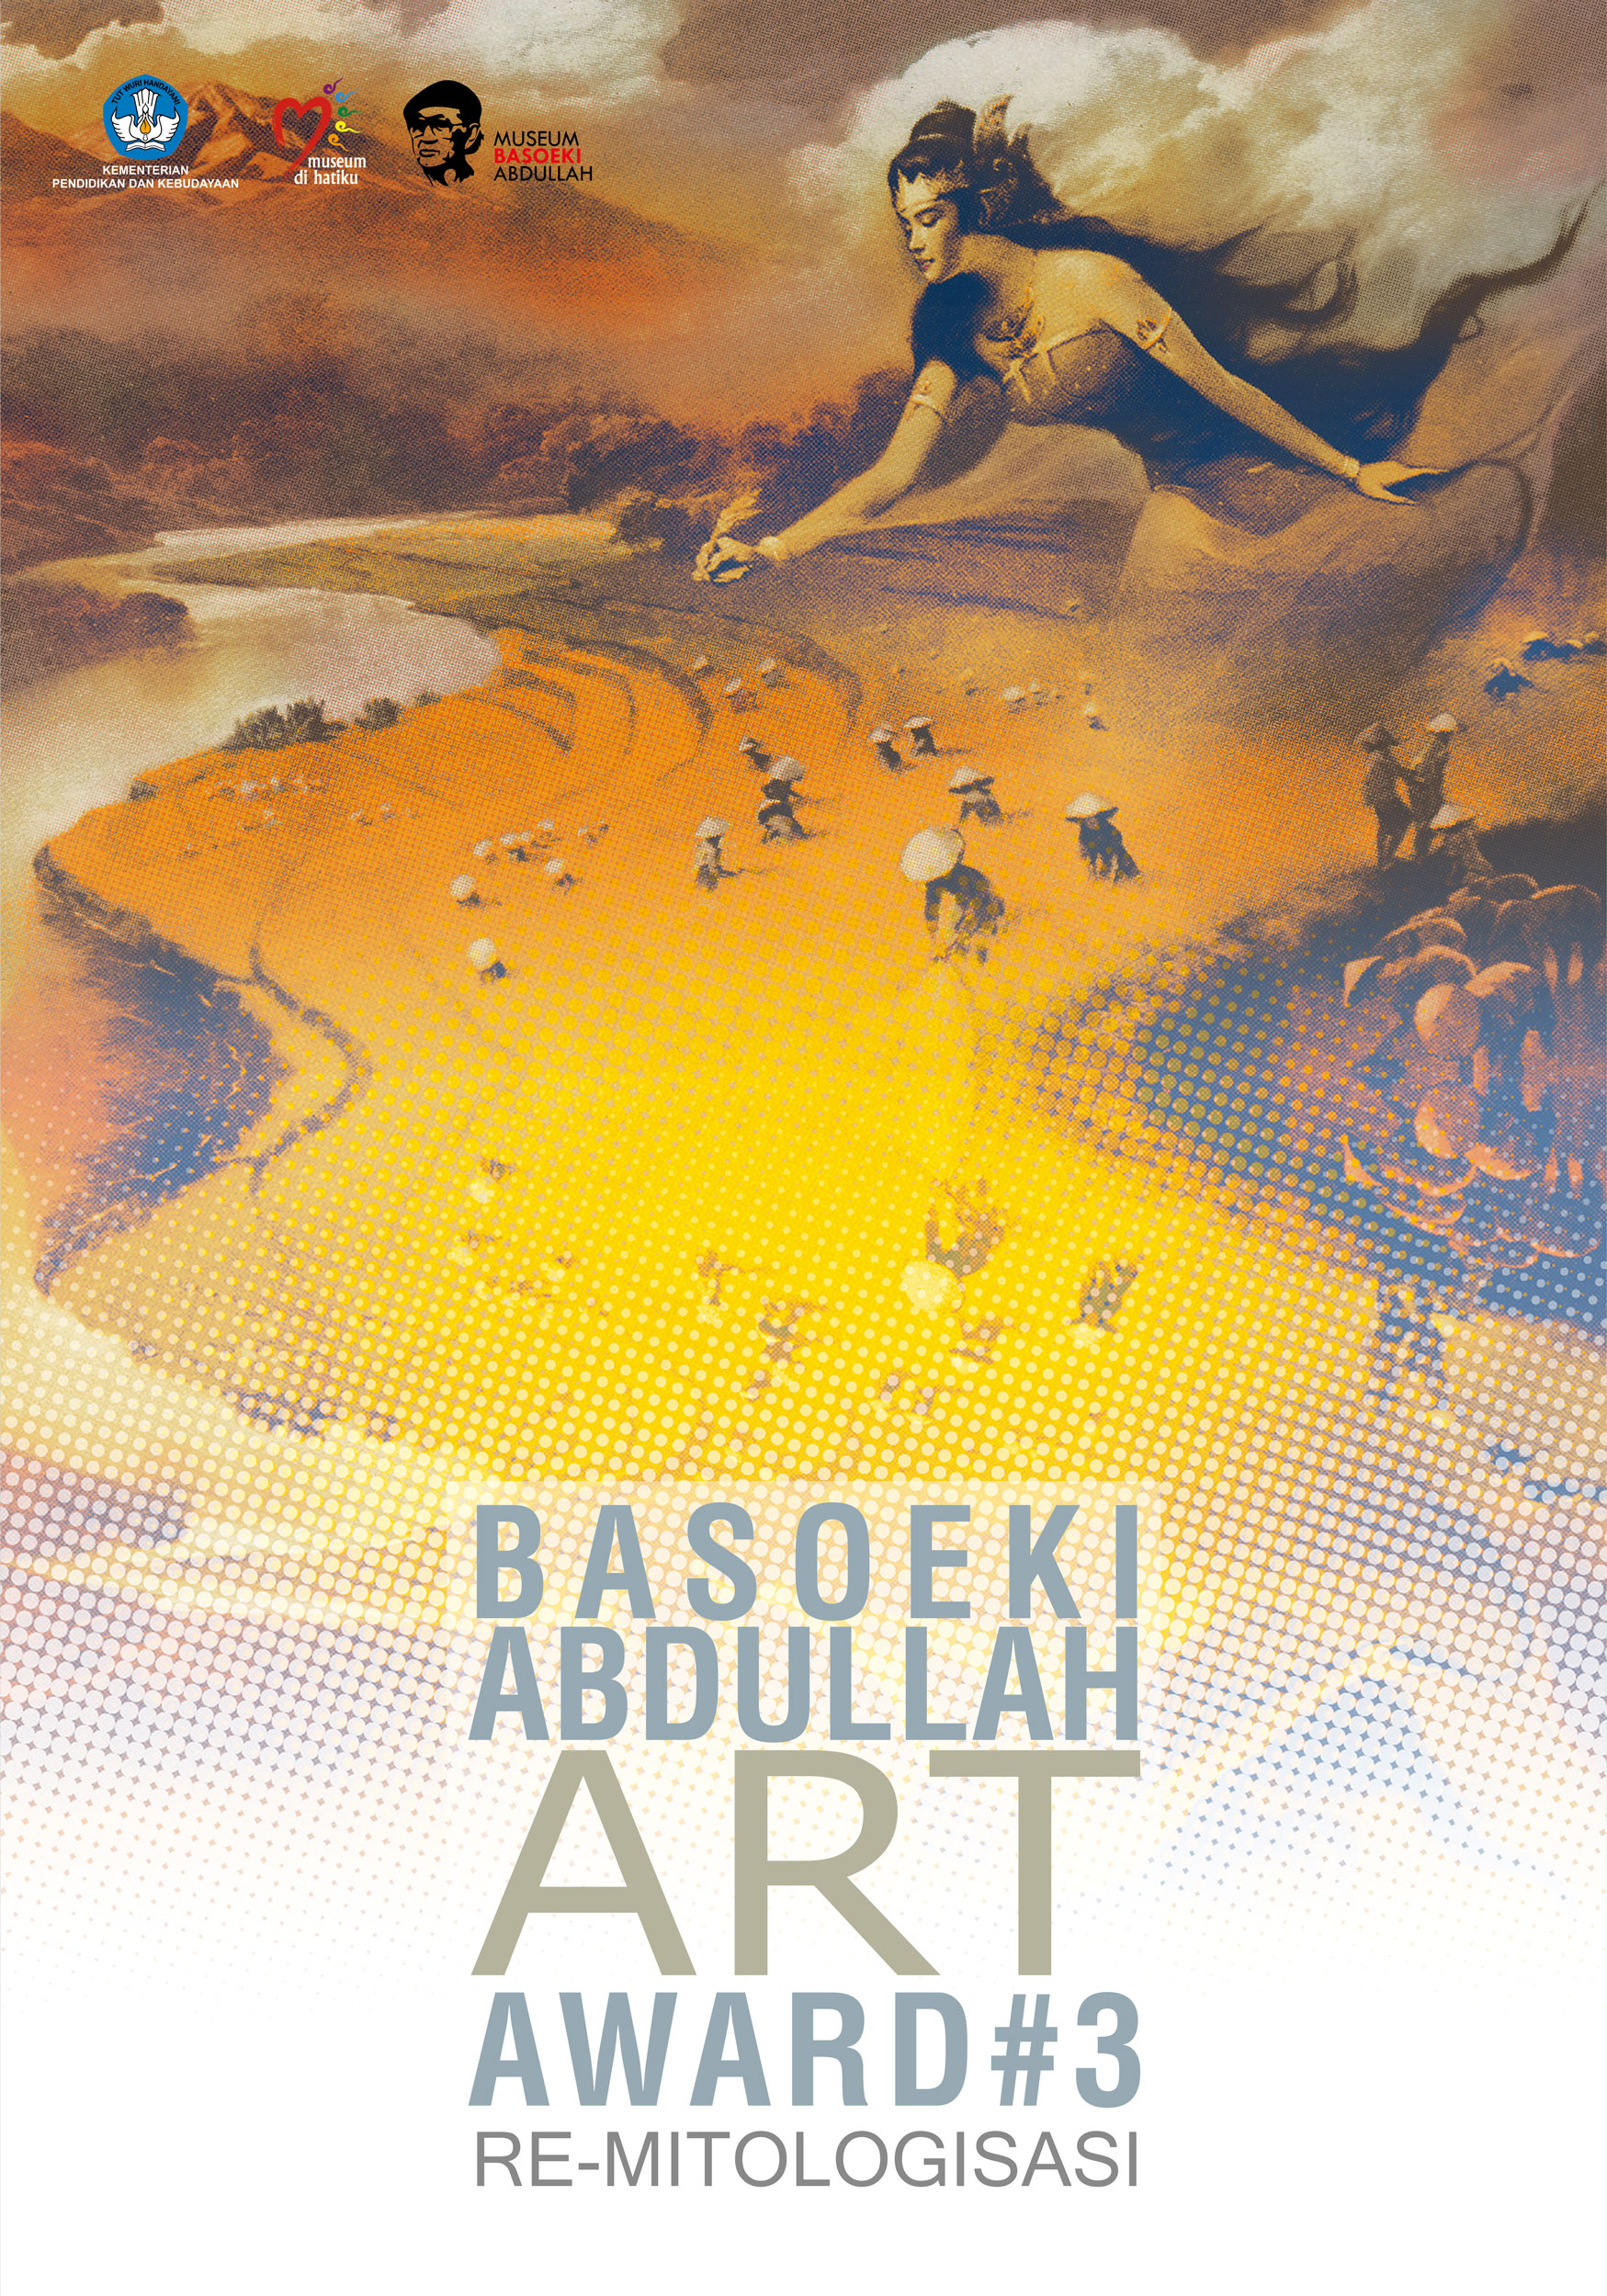 You are currently viewing BASOEKI ABDULLAH ART AWARD #3